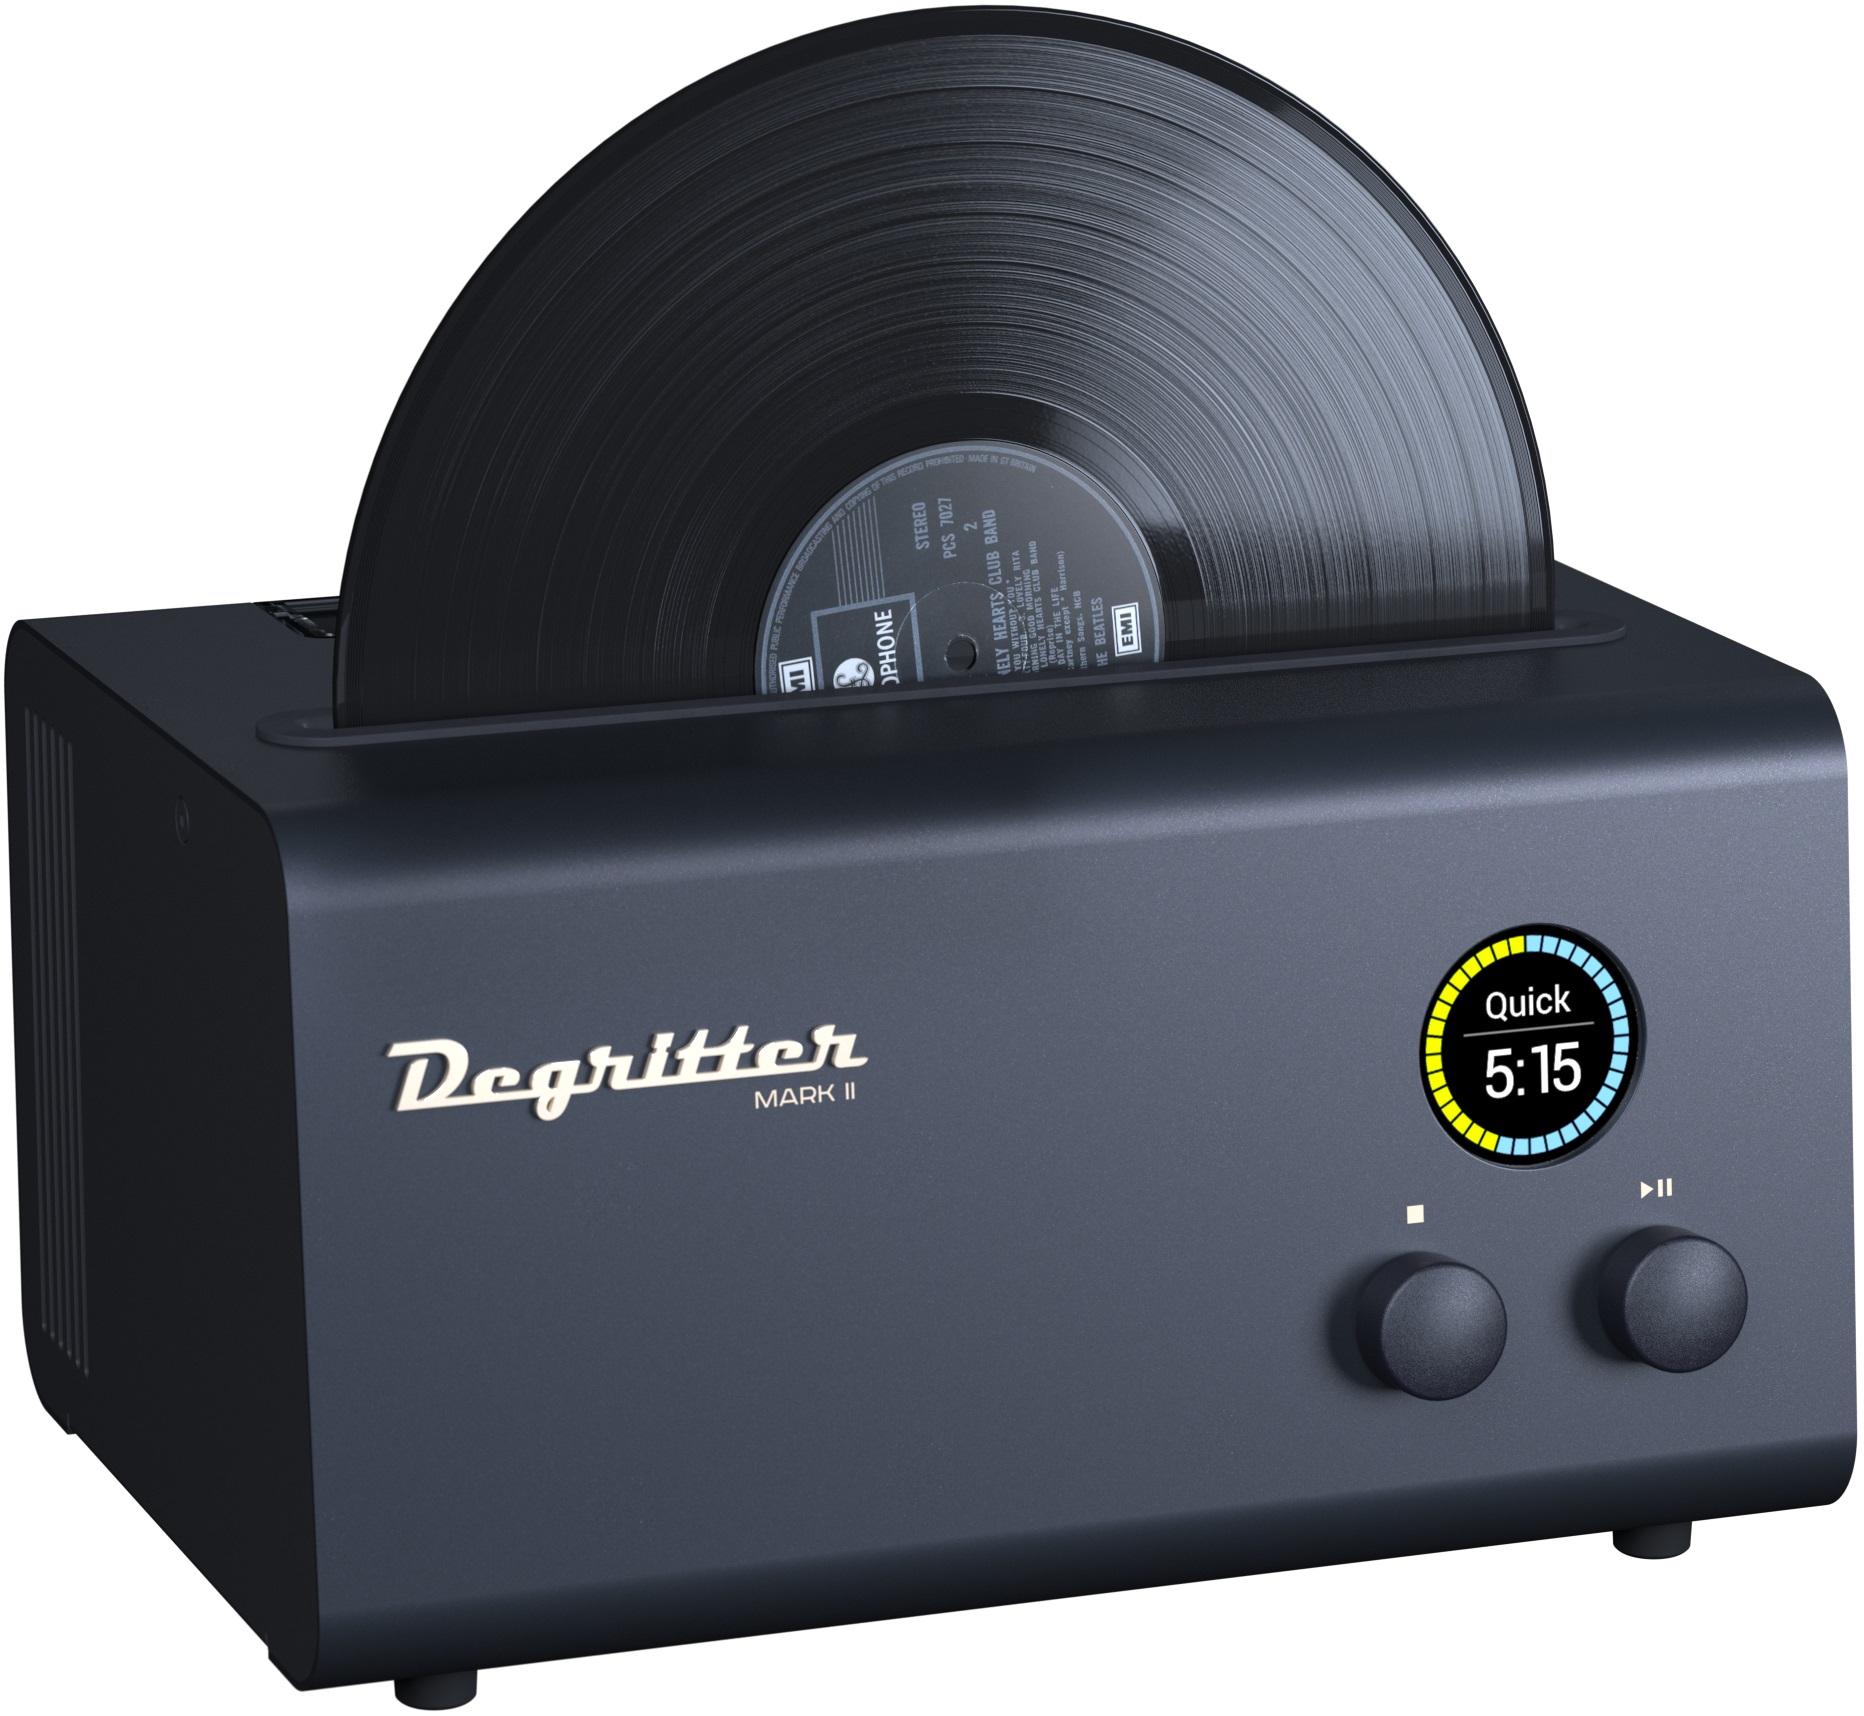 degritter-mark-ii-rcm-ultrasonic-record-cleaning-machine-black